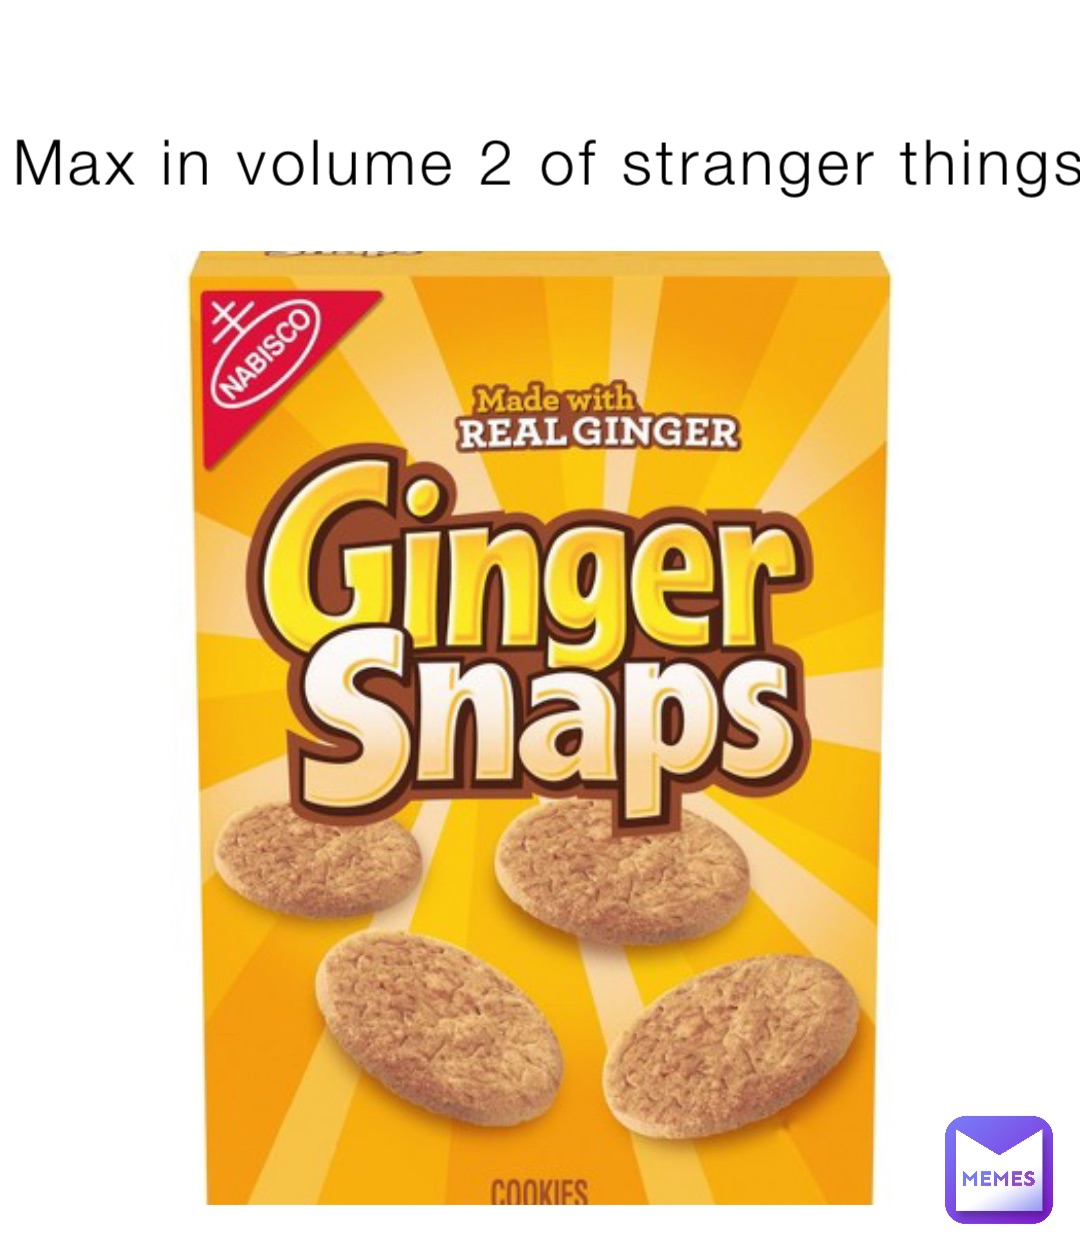 Max in volume 2 of stranger things